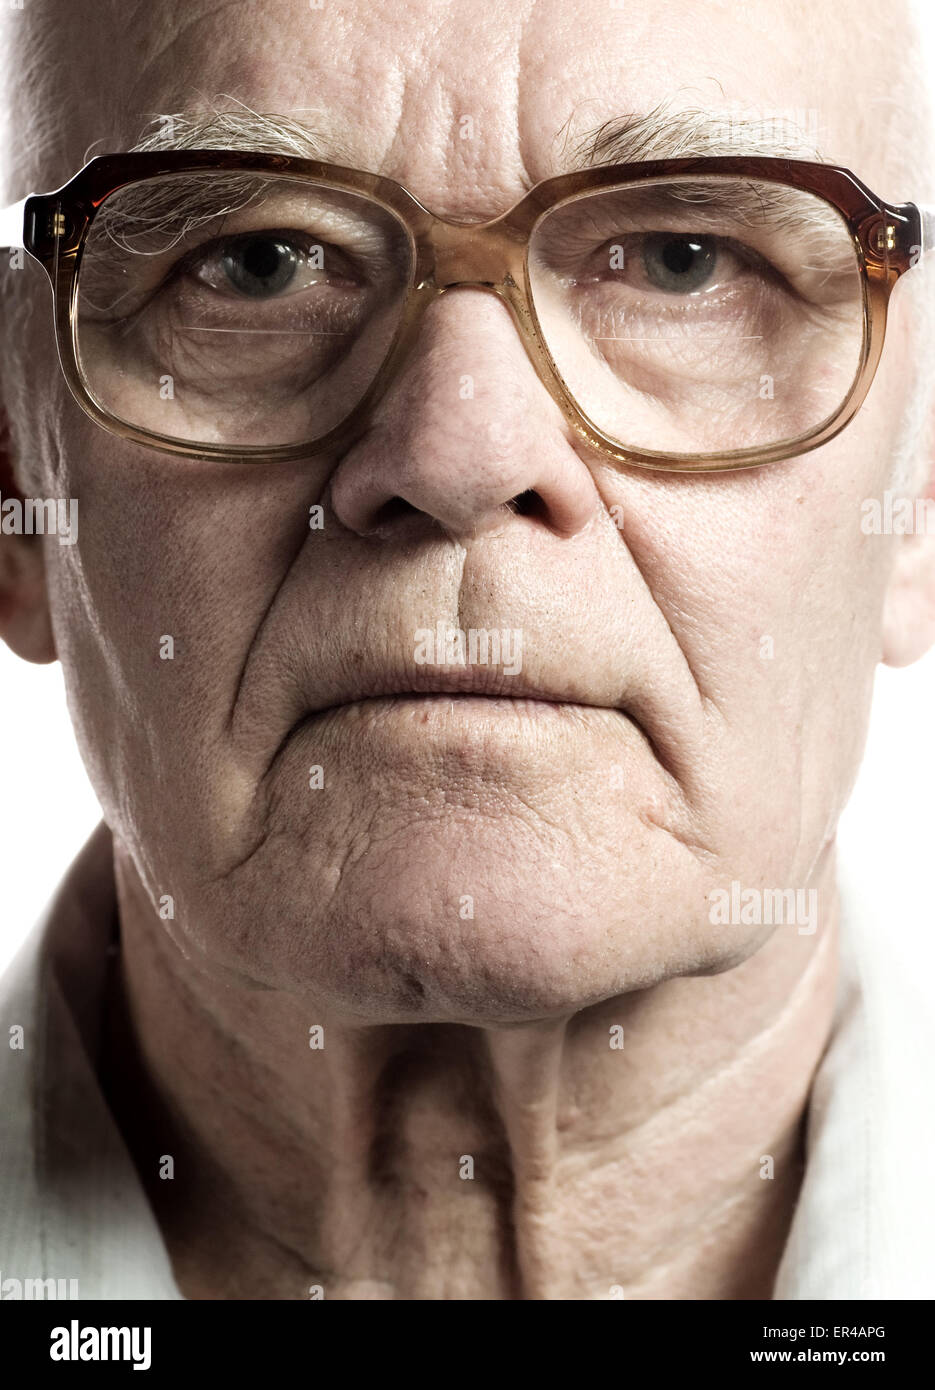 Elderly man with massive glasses Stock Photo